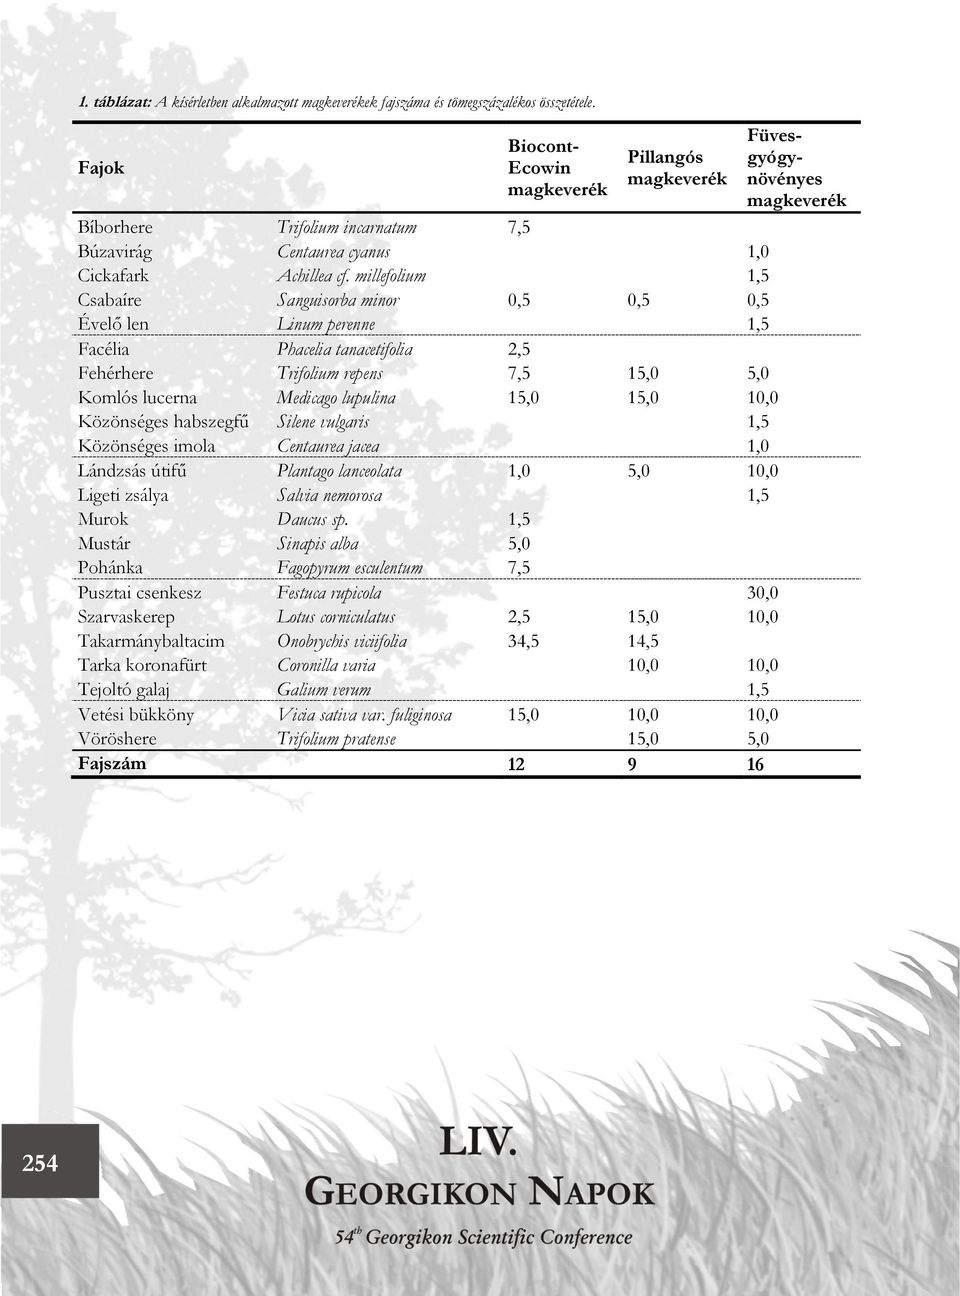 millefolium 1,5 Csabaíre Sanguisorba minor 0,5 0,5 0,5 Évelő len Linum perenne 1,5 Facélia Phacelia tanacetifolia 2,5 Fehérhere Trifolium repens 7,5 15,0 5,0 Komlós lucerna Medicago lupulina 15,0